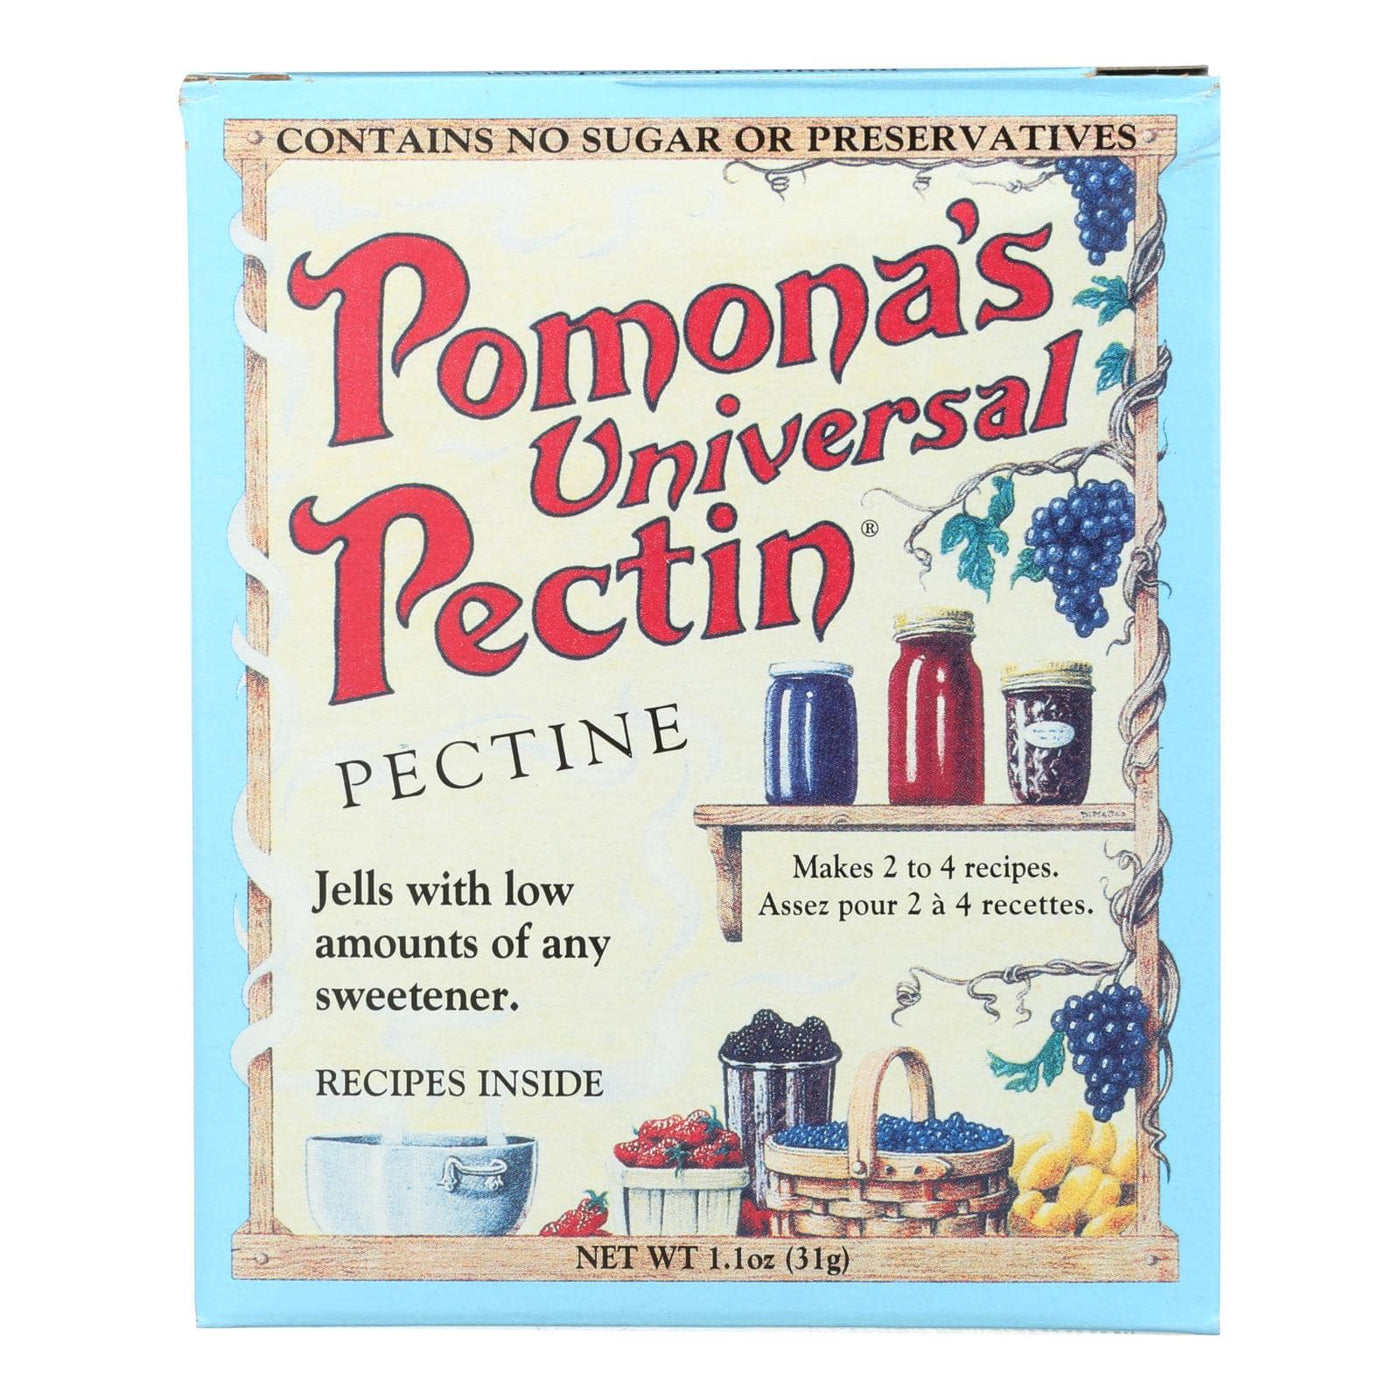 Pomona's Pectin Universal Pectin - 1 Oz - Case Of 24 | OnlyNaturals.us